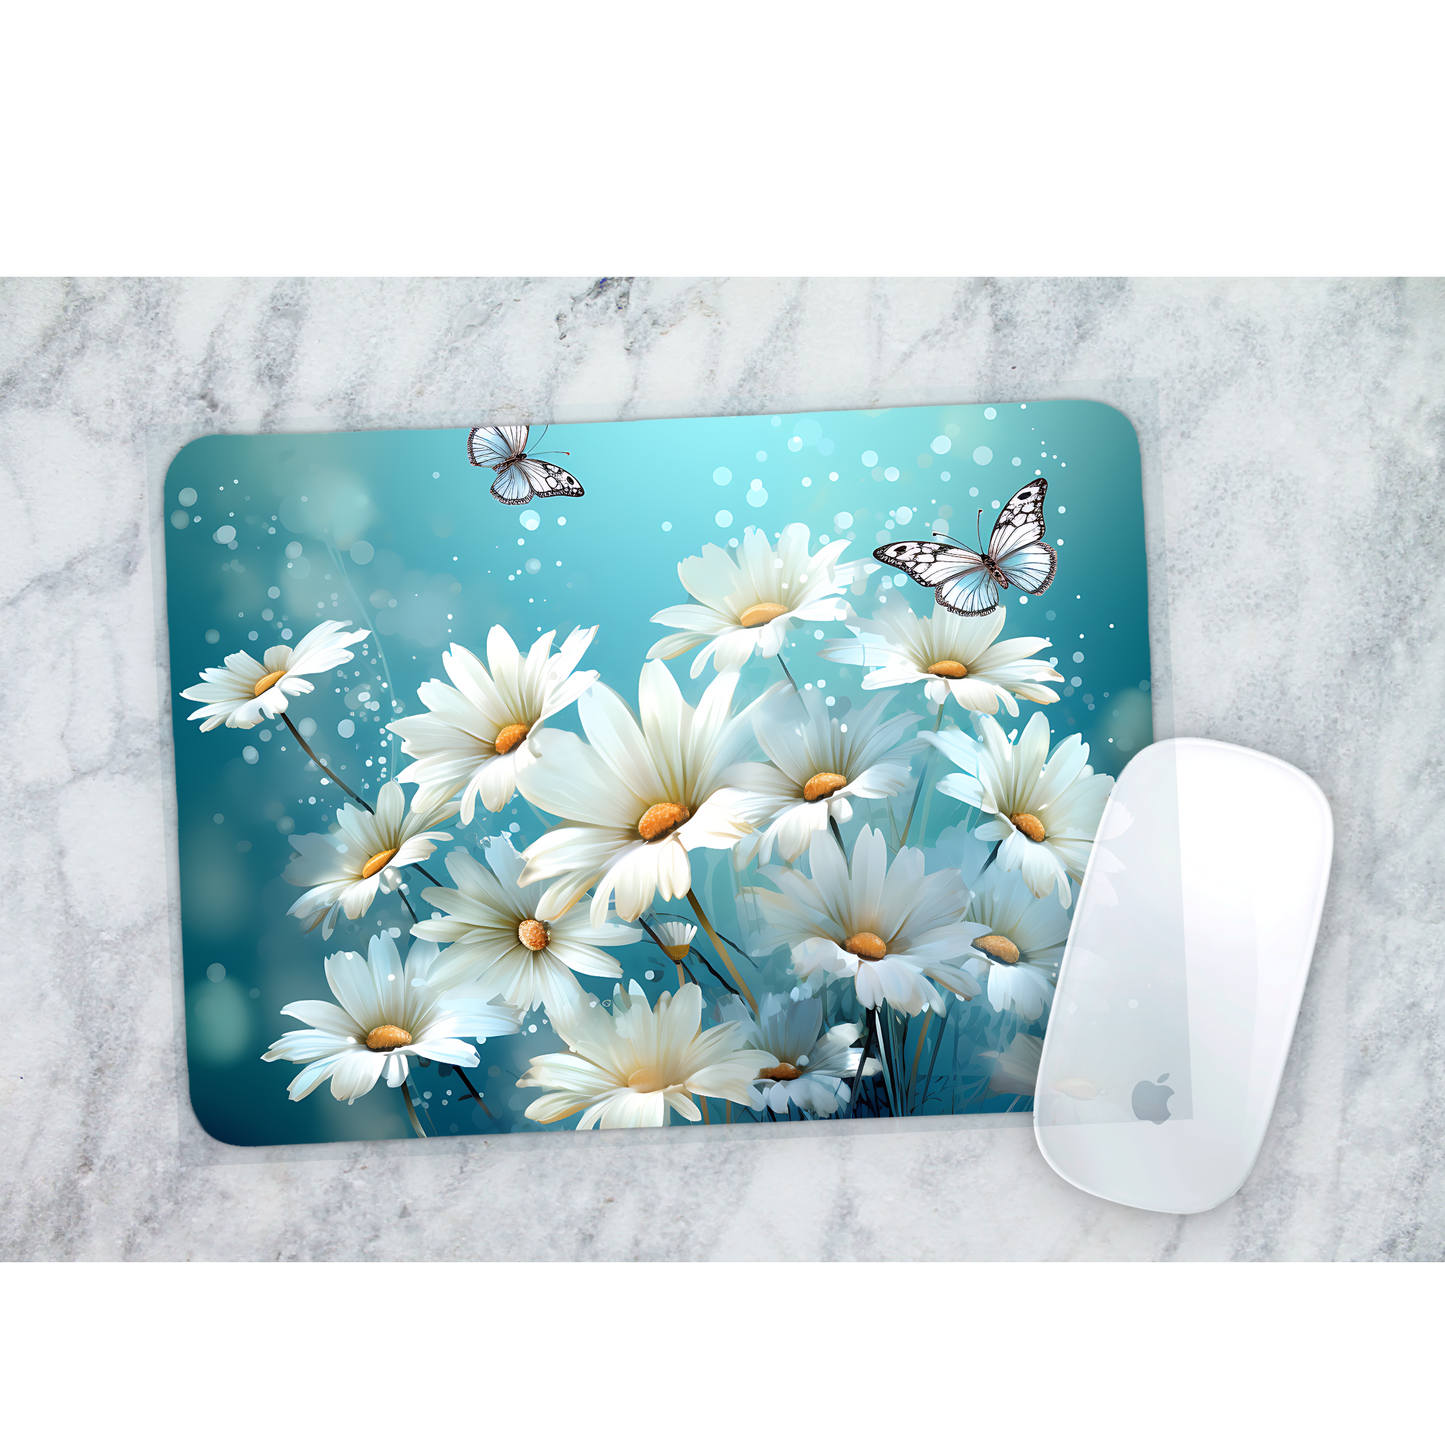 Premium Printed Anti-Slip Mouse Mat - Ultra Durable Delicate Daisy Design